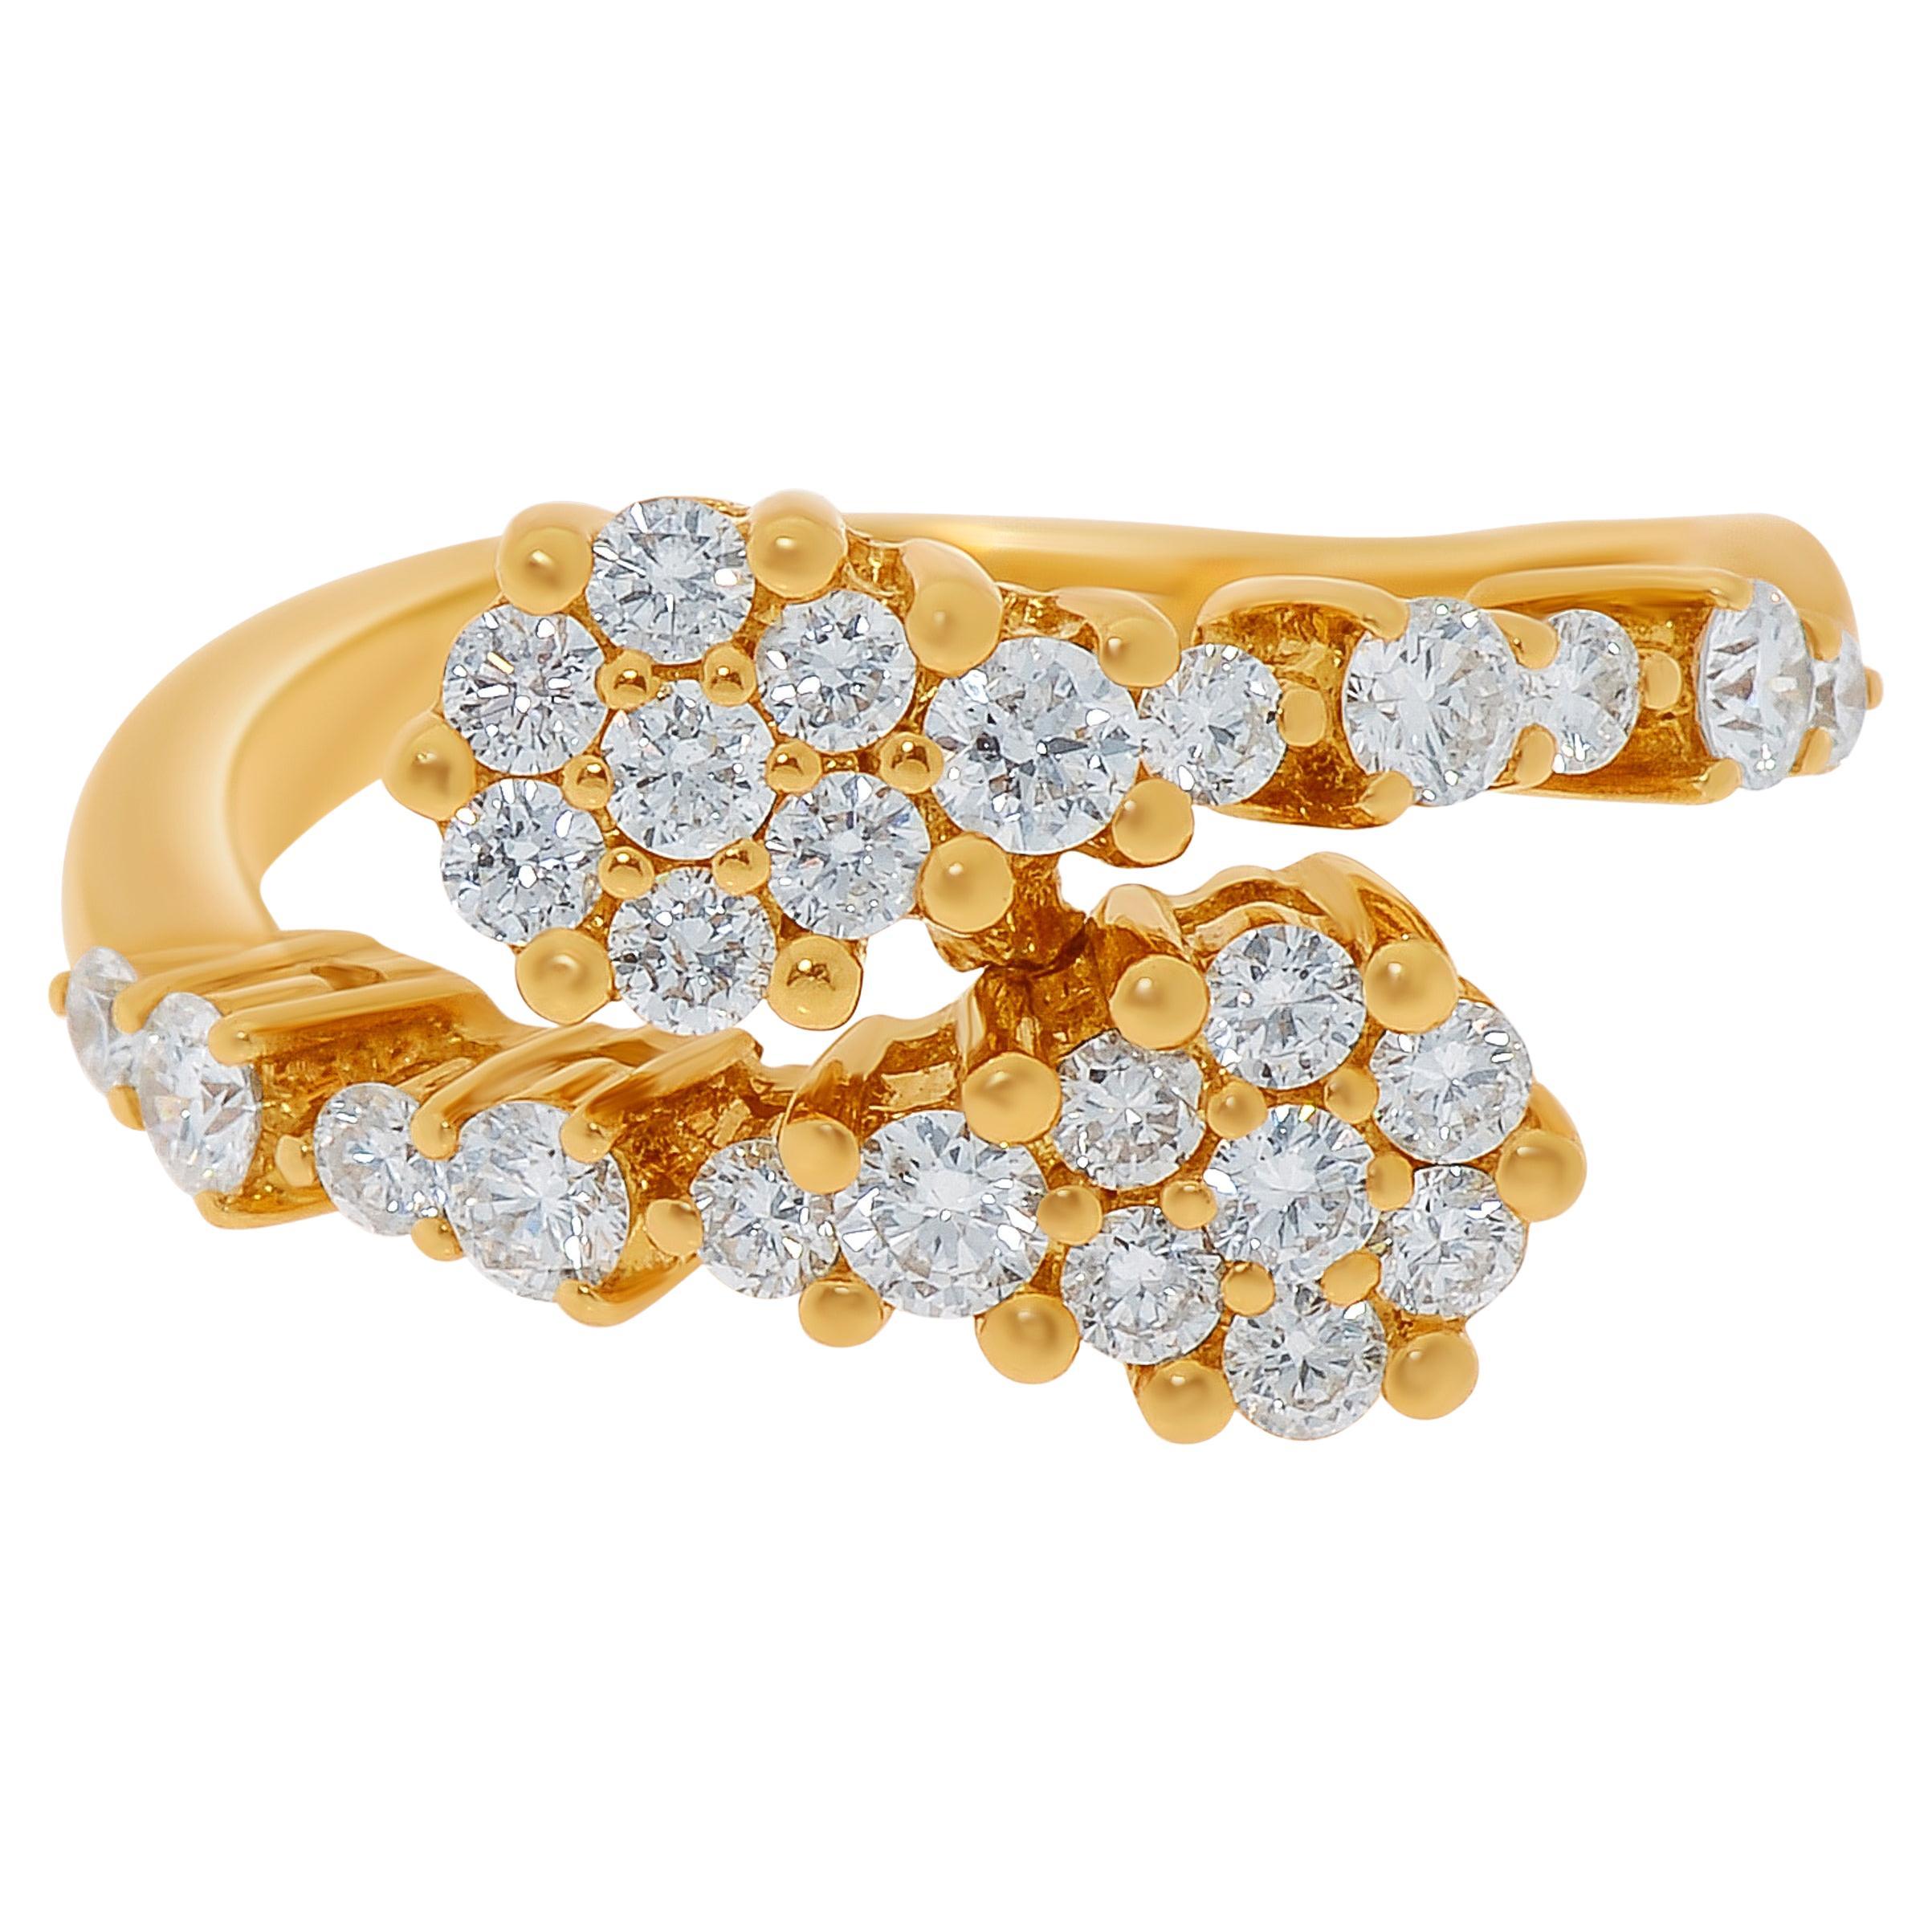 Zydo 18K Yellow Gold, White Diamond Contrarier Ring sz. 7.5 For Sale